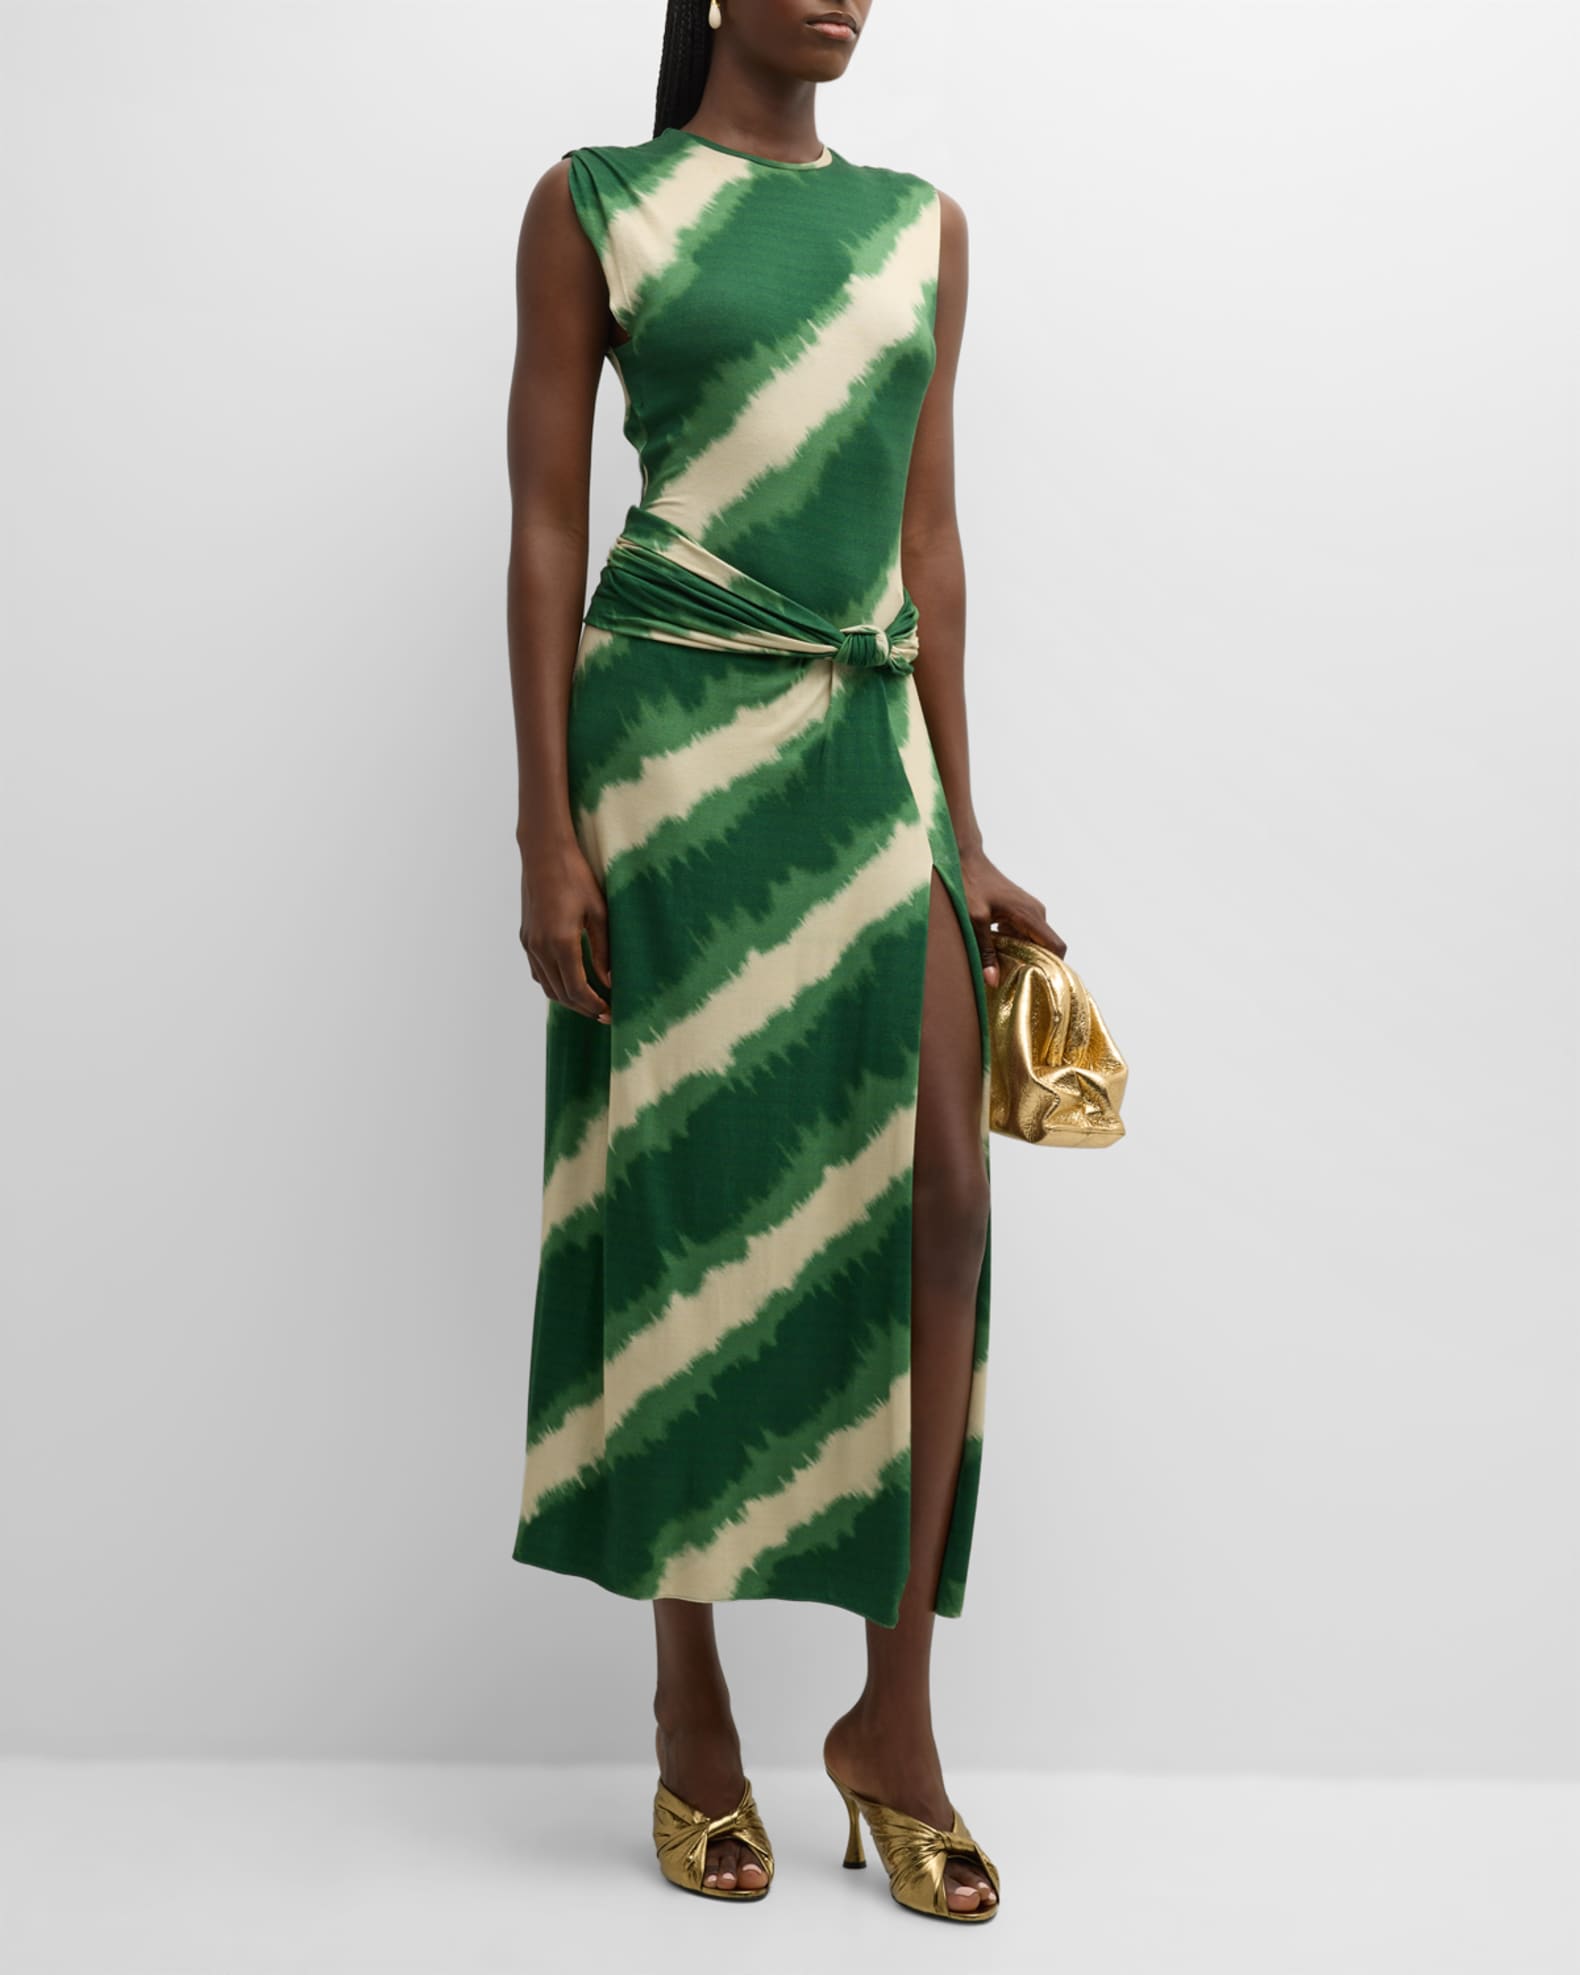 Louis Vuitton limited edition Sari Dress